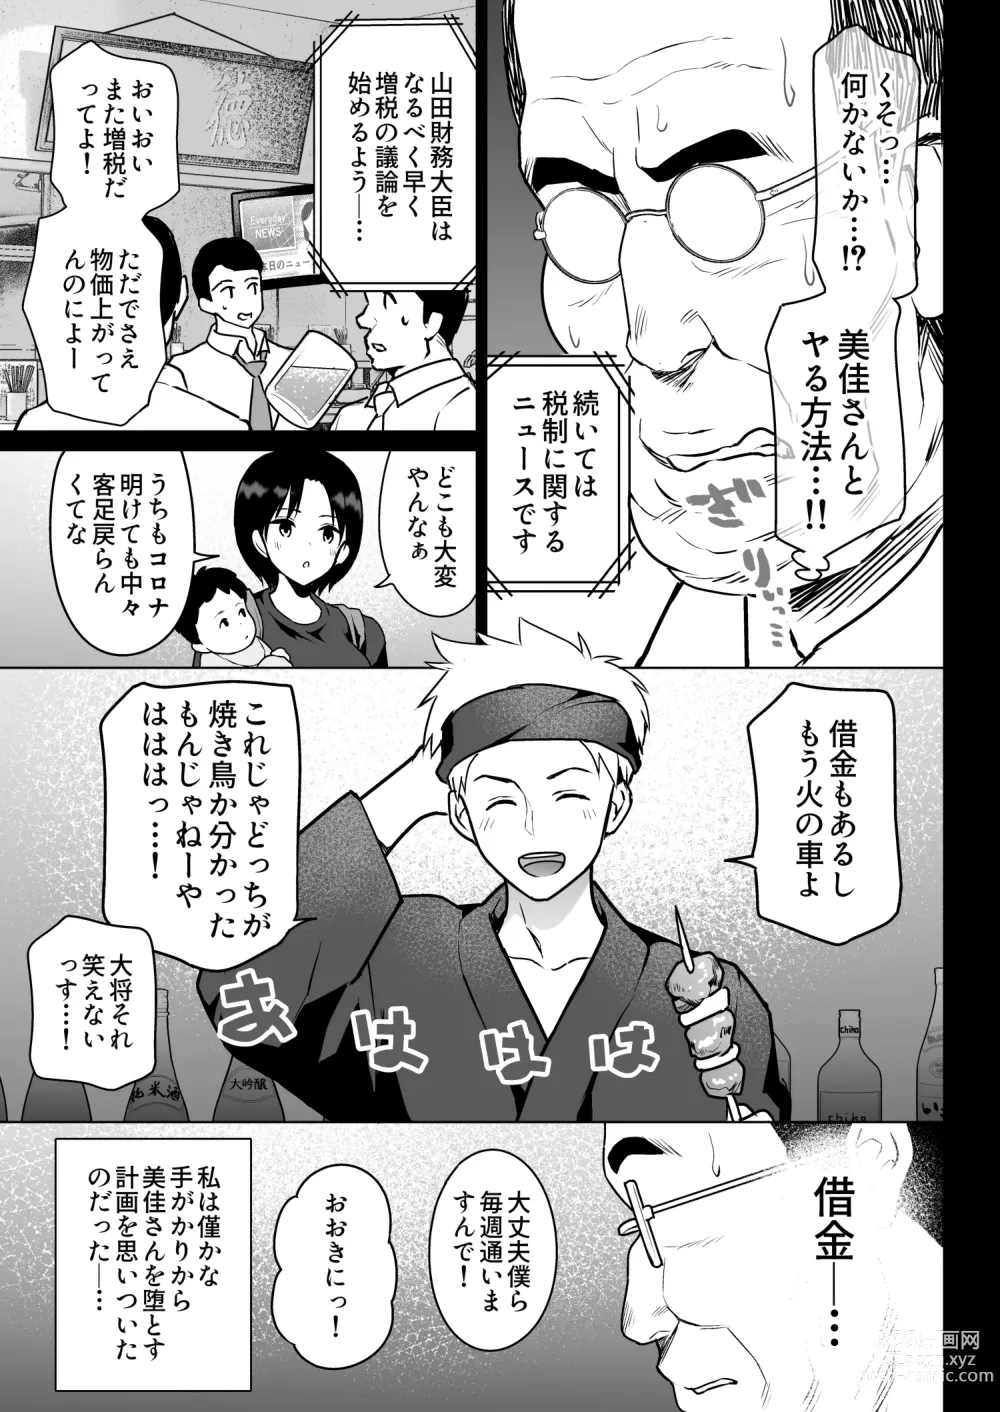 Page 6 of doujinshi Oshidori Fuufu Yakitorare